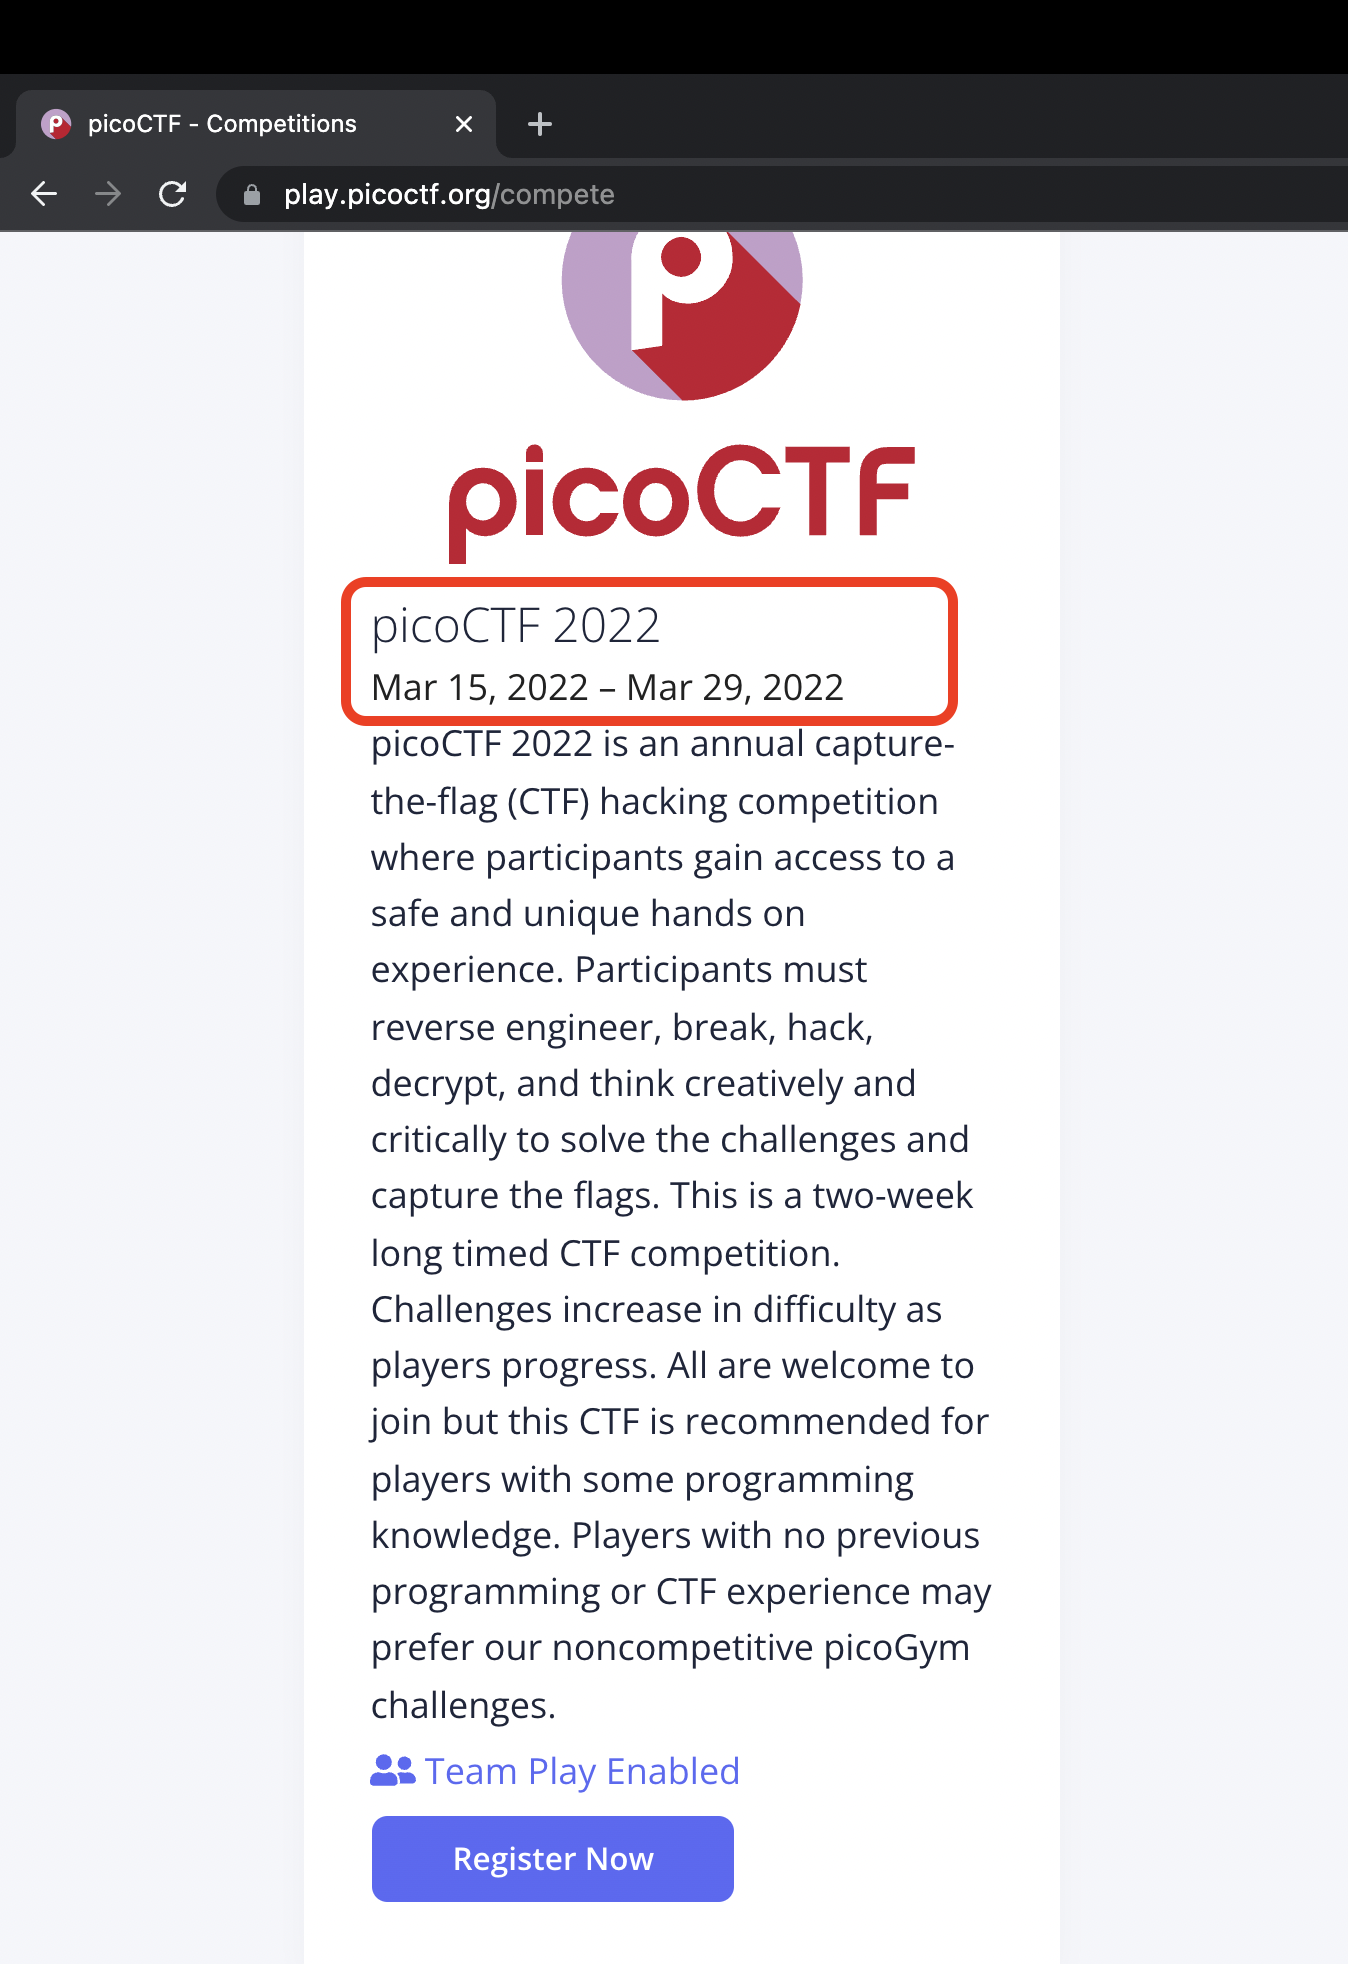 picoCTF 2022 information